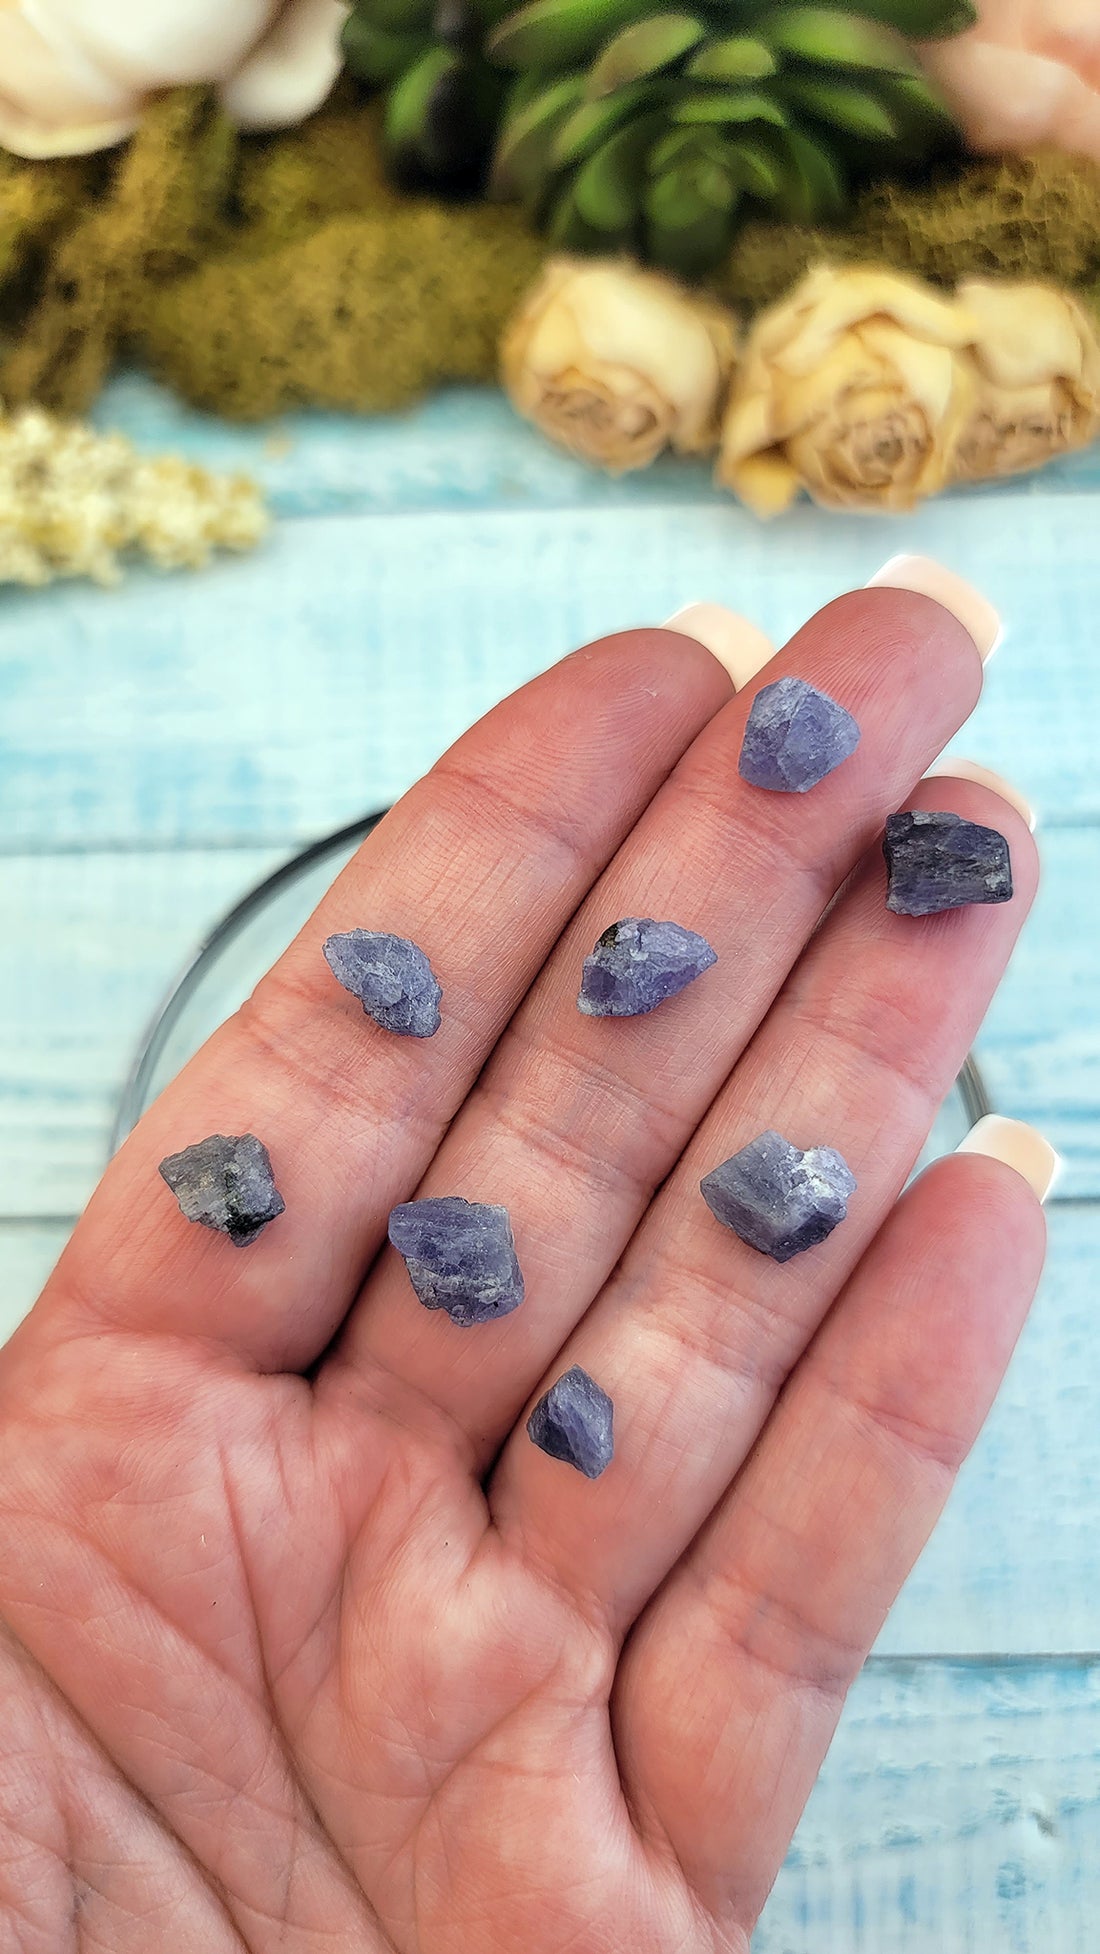 rough tanzanite stones on hand